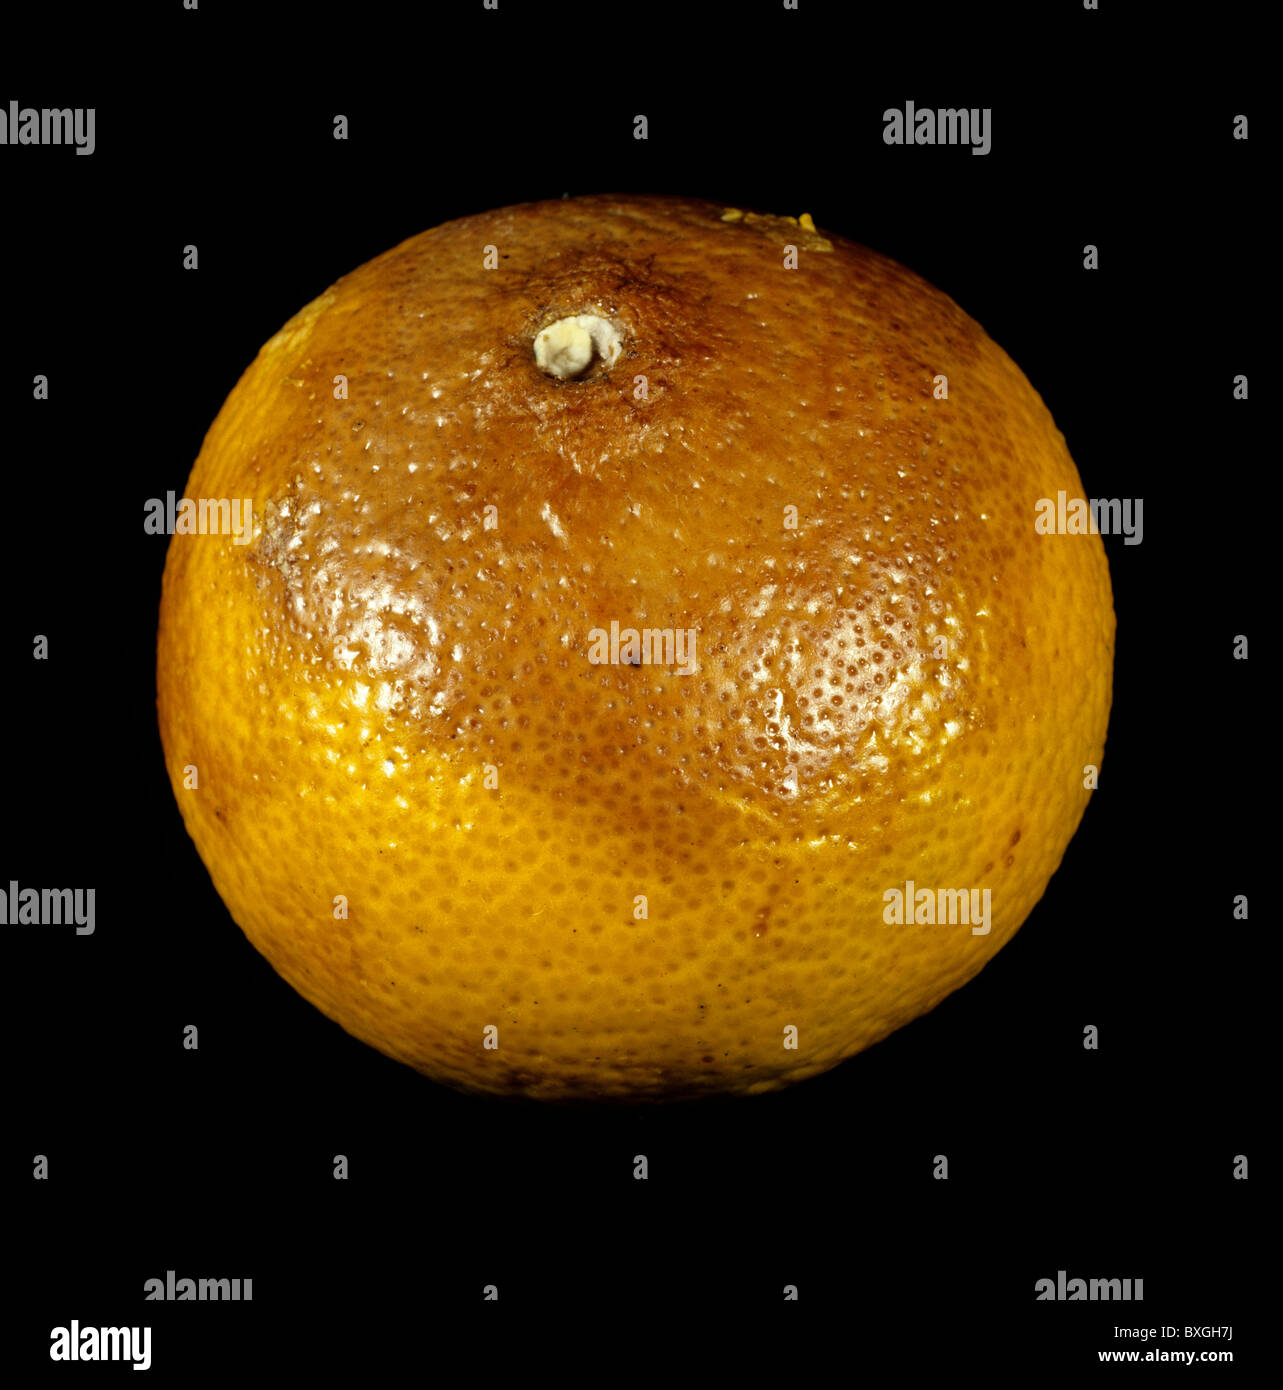 Diplodia stem end rot (Lasiodiplodia theobromae) on stored orange fruit Stock Photo